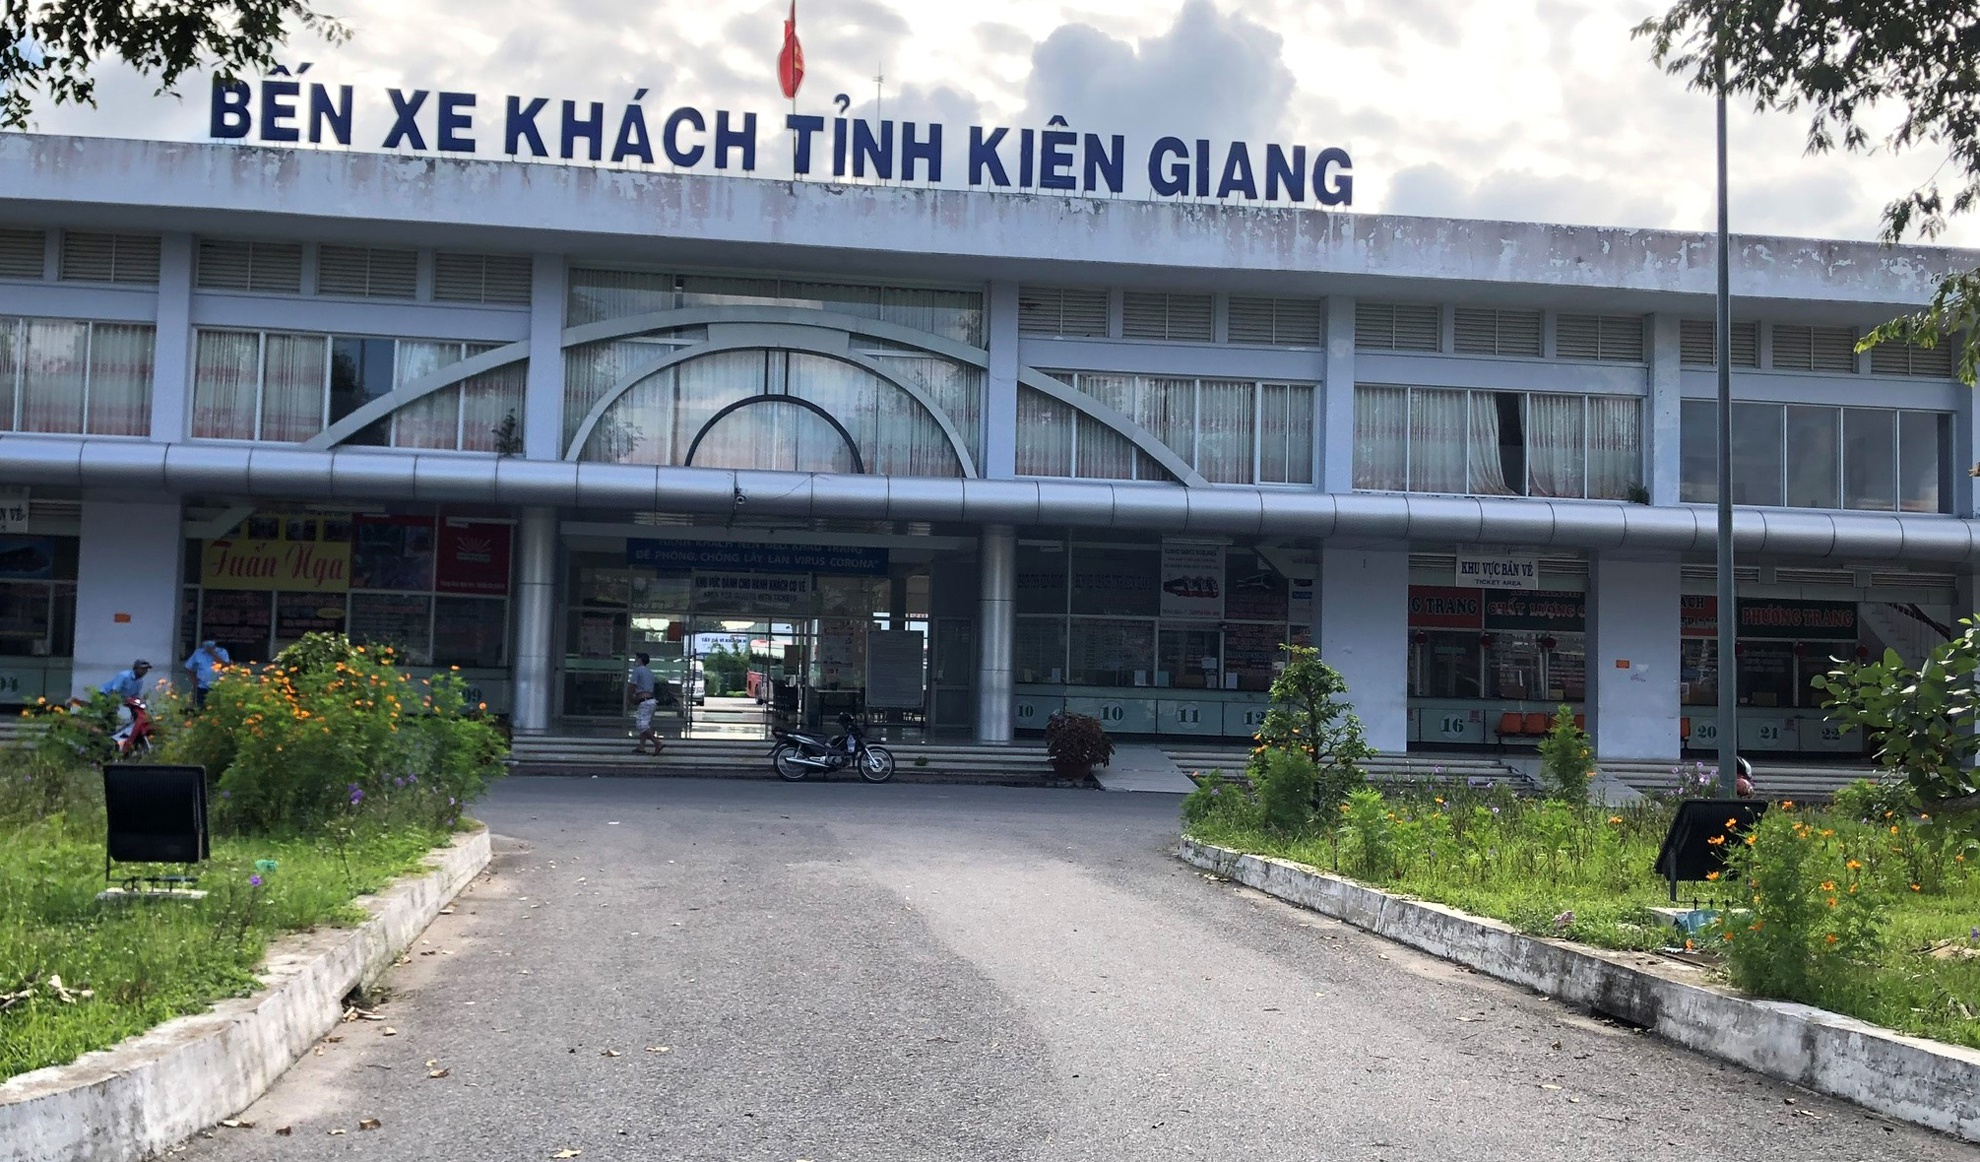 Noi lai tuyen xe khach Kien Giang - TP.HCM anh 1  - kien_giang - Kiên Giang nối lại tuyến xe khách đến TP.HCM